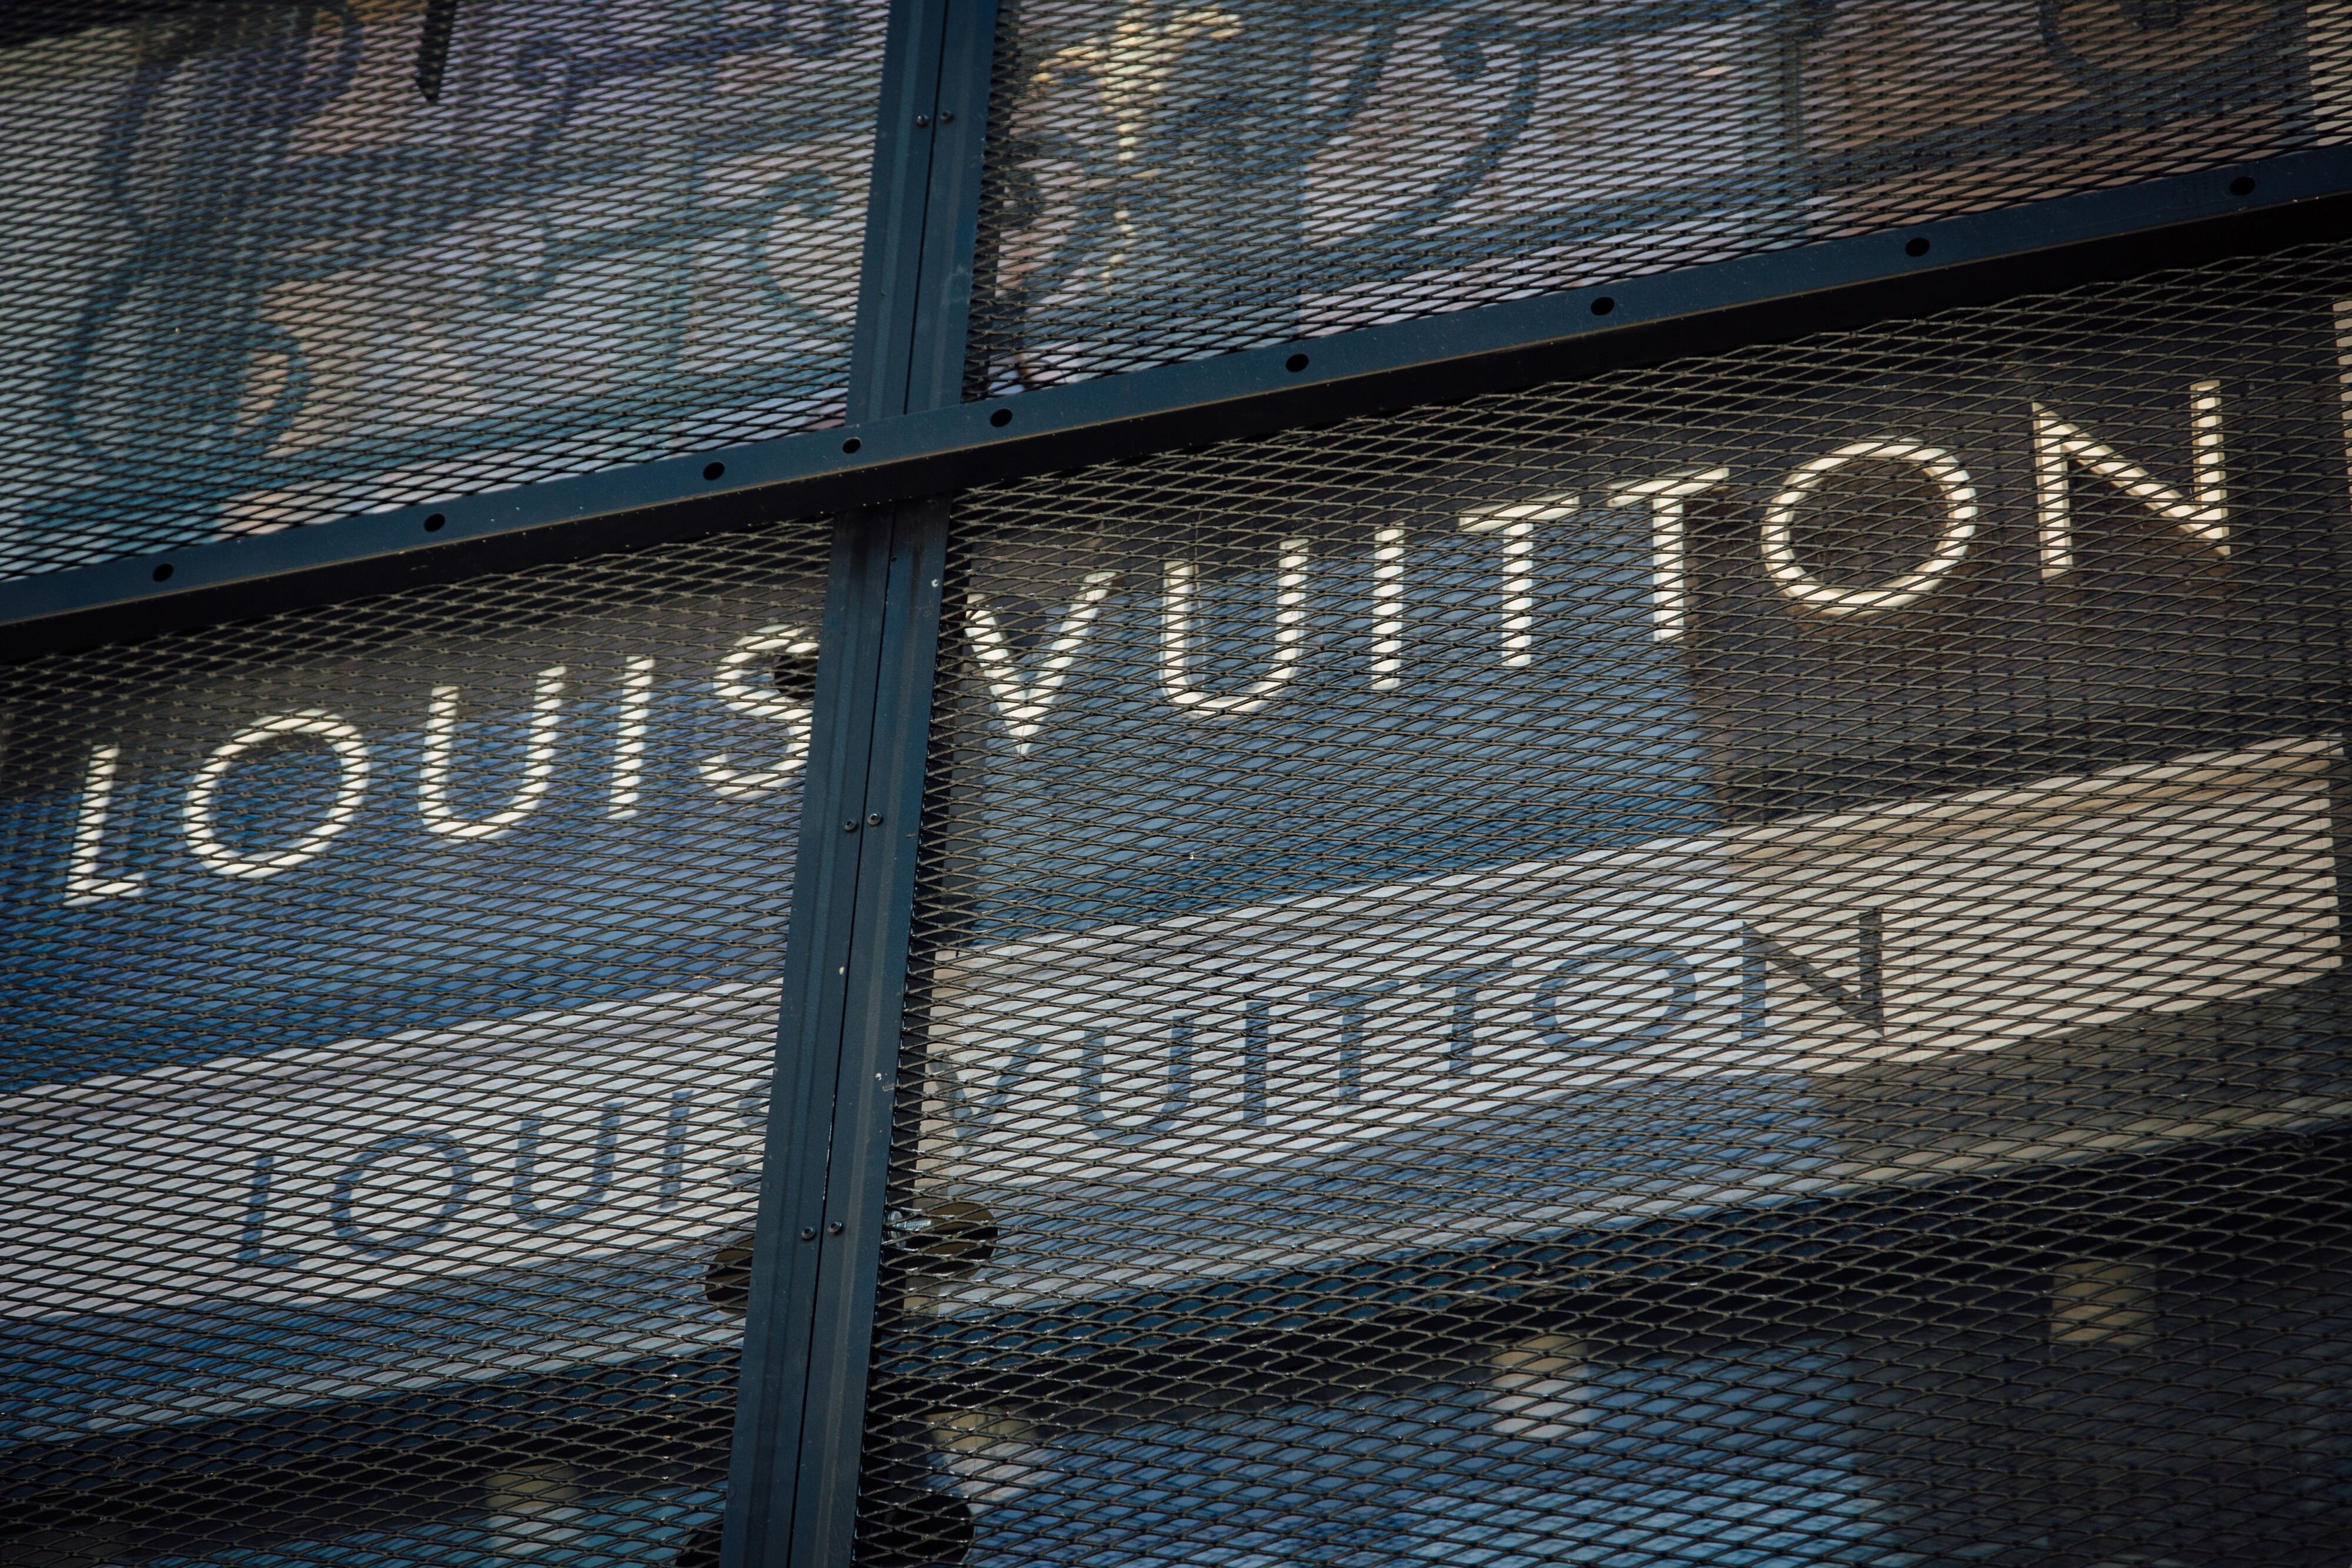 Louis Vuitton's sales in Korea slump